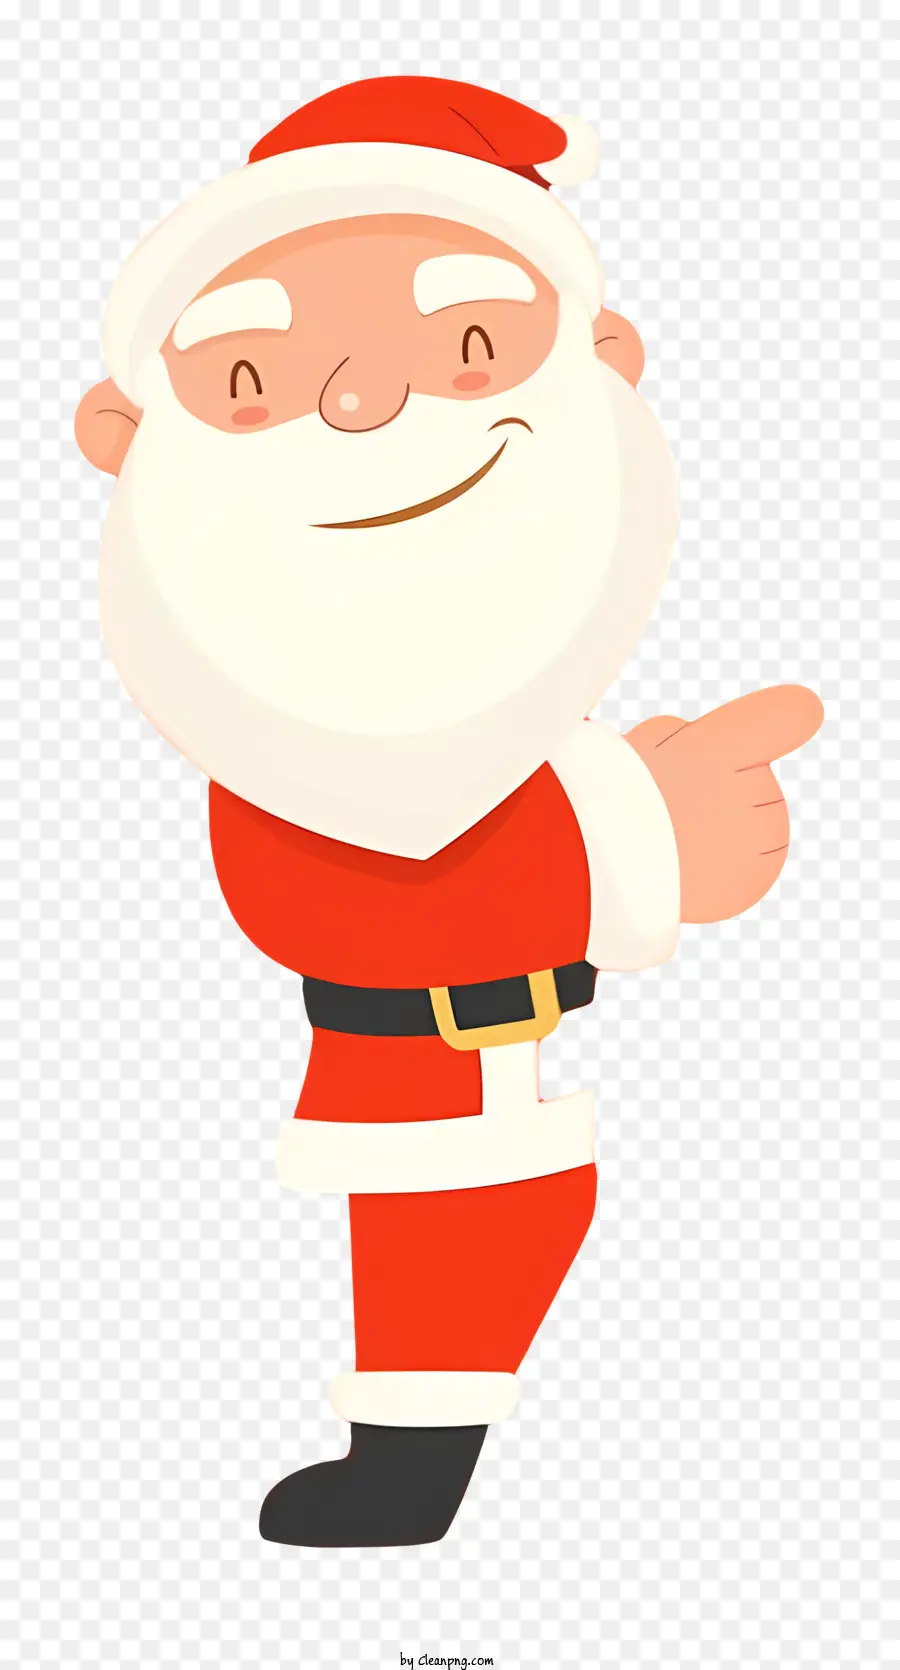 Santa Claus cartoon